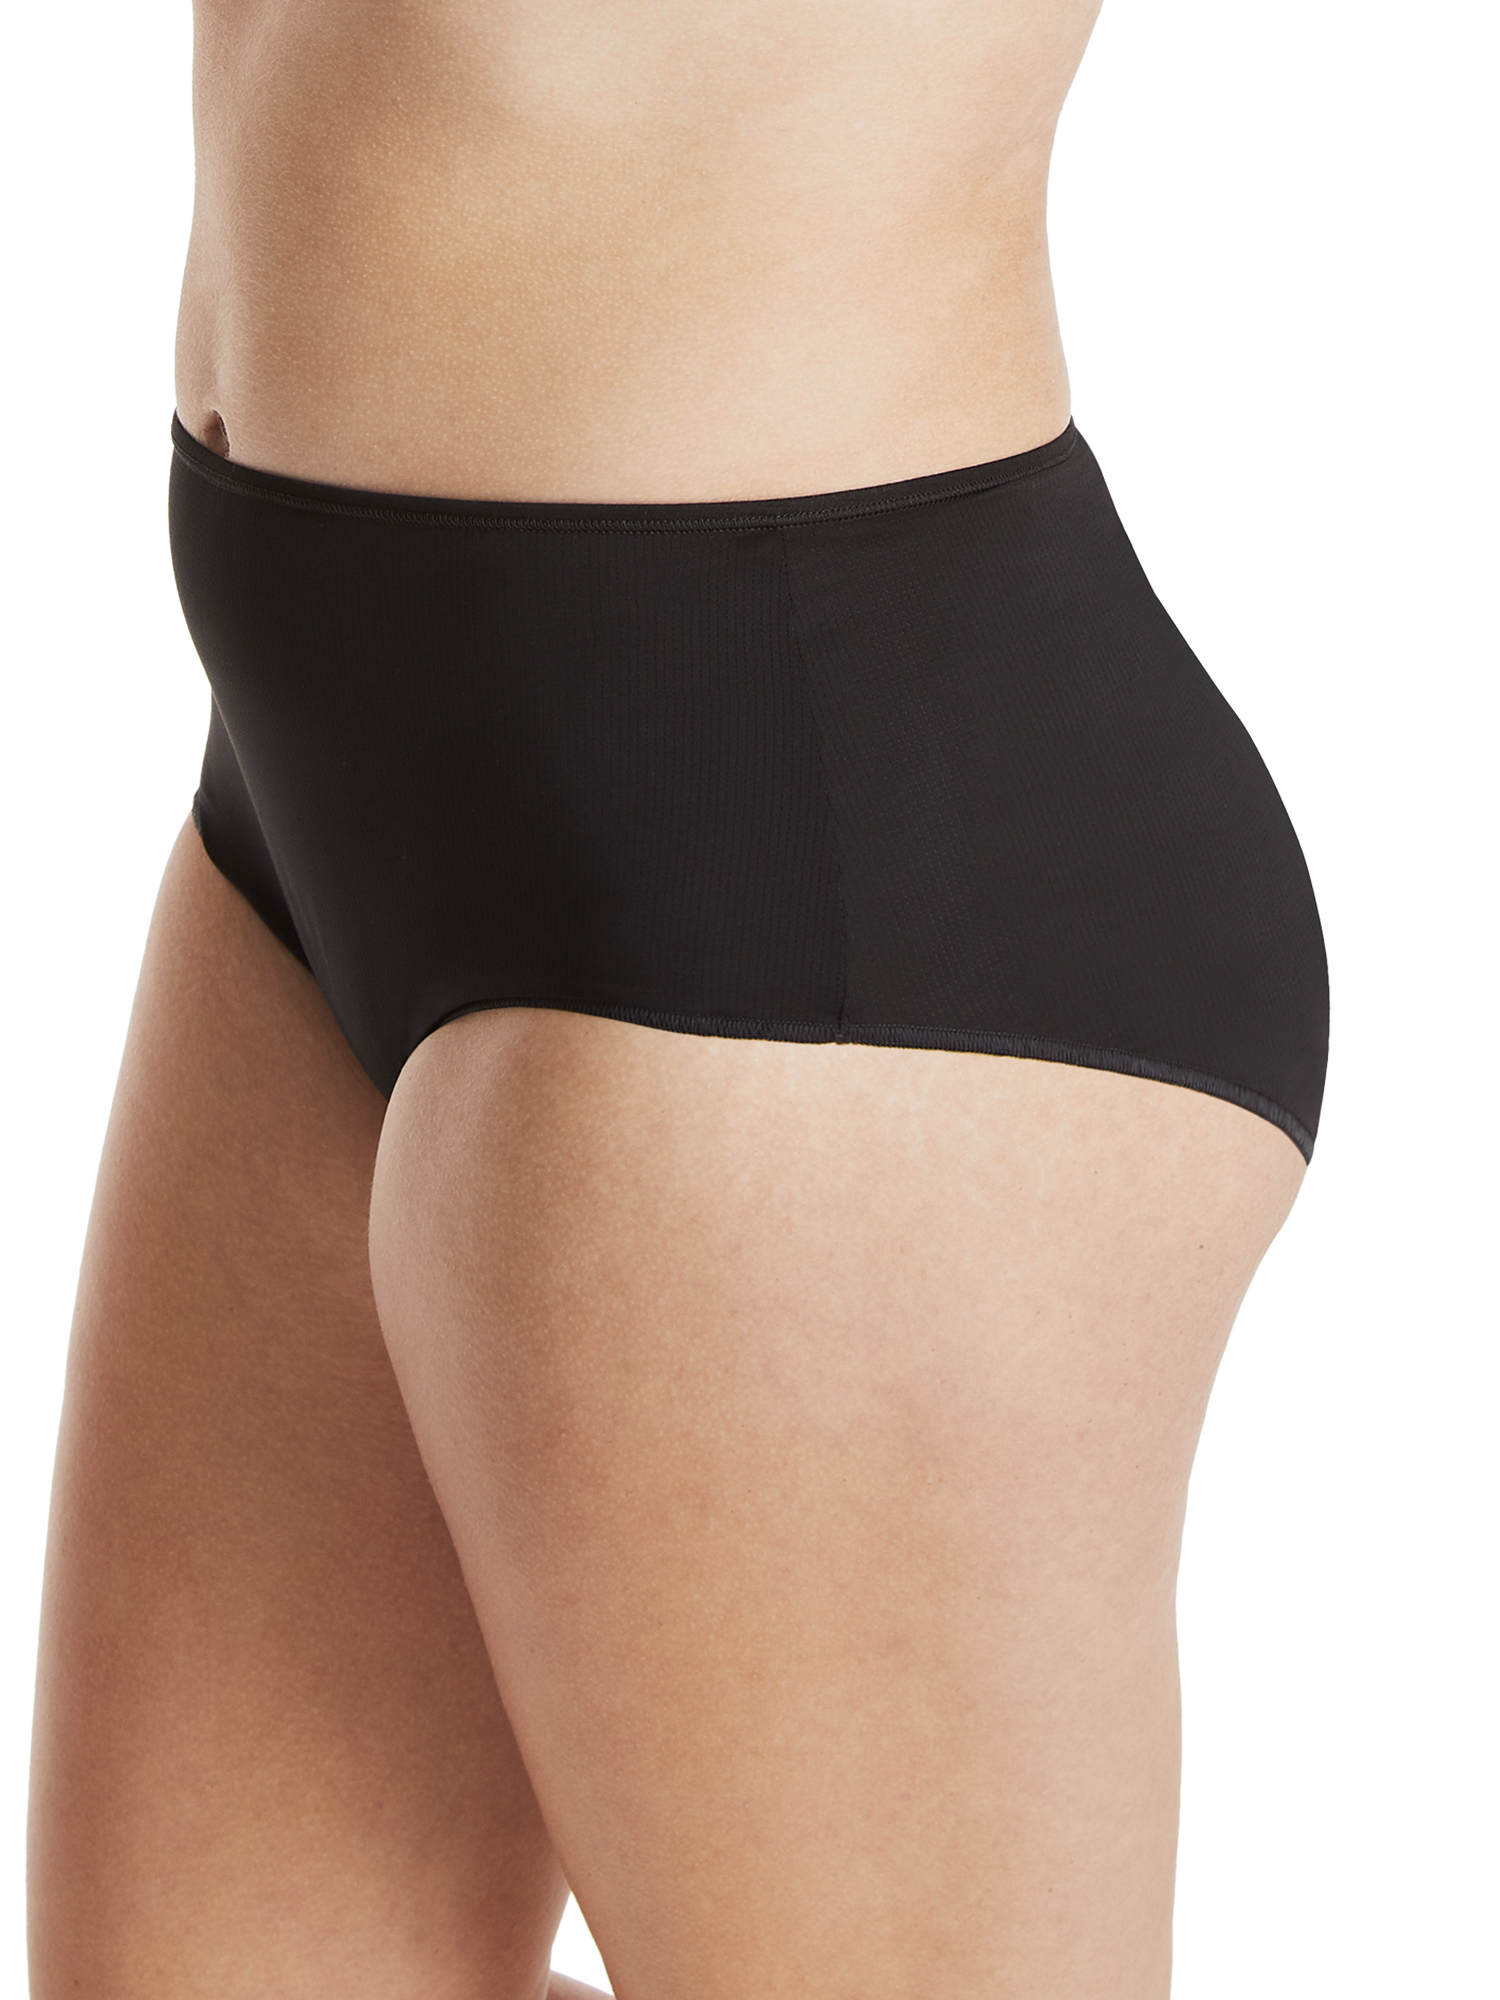 Hanes Women's Breathable Mesh Brief Underwear, 10 Pack - image 5 of 7